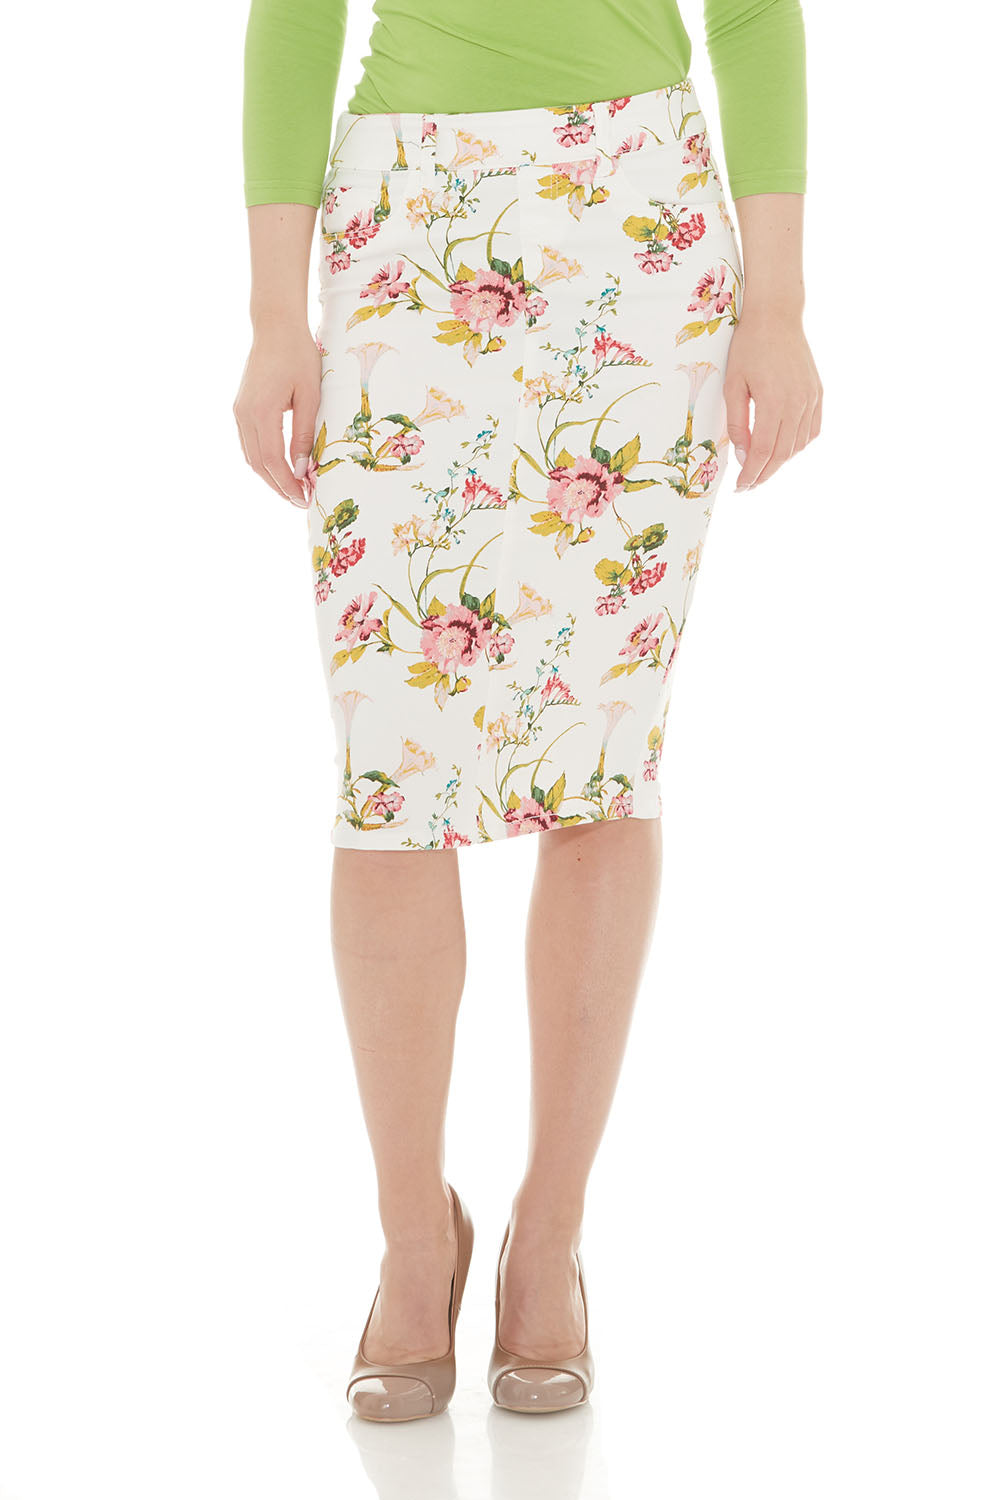 Esteez BROOKLYN Denim Skirt - Below the knee Jean Skirt for women - White Floral